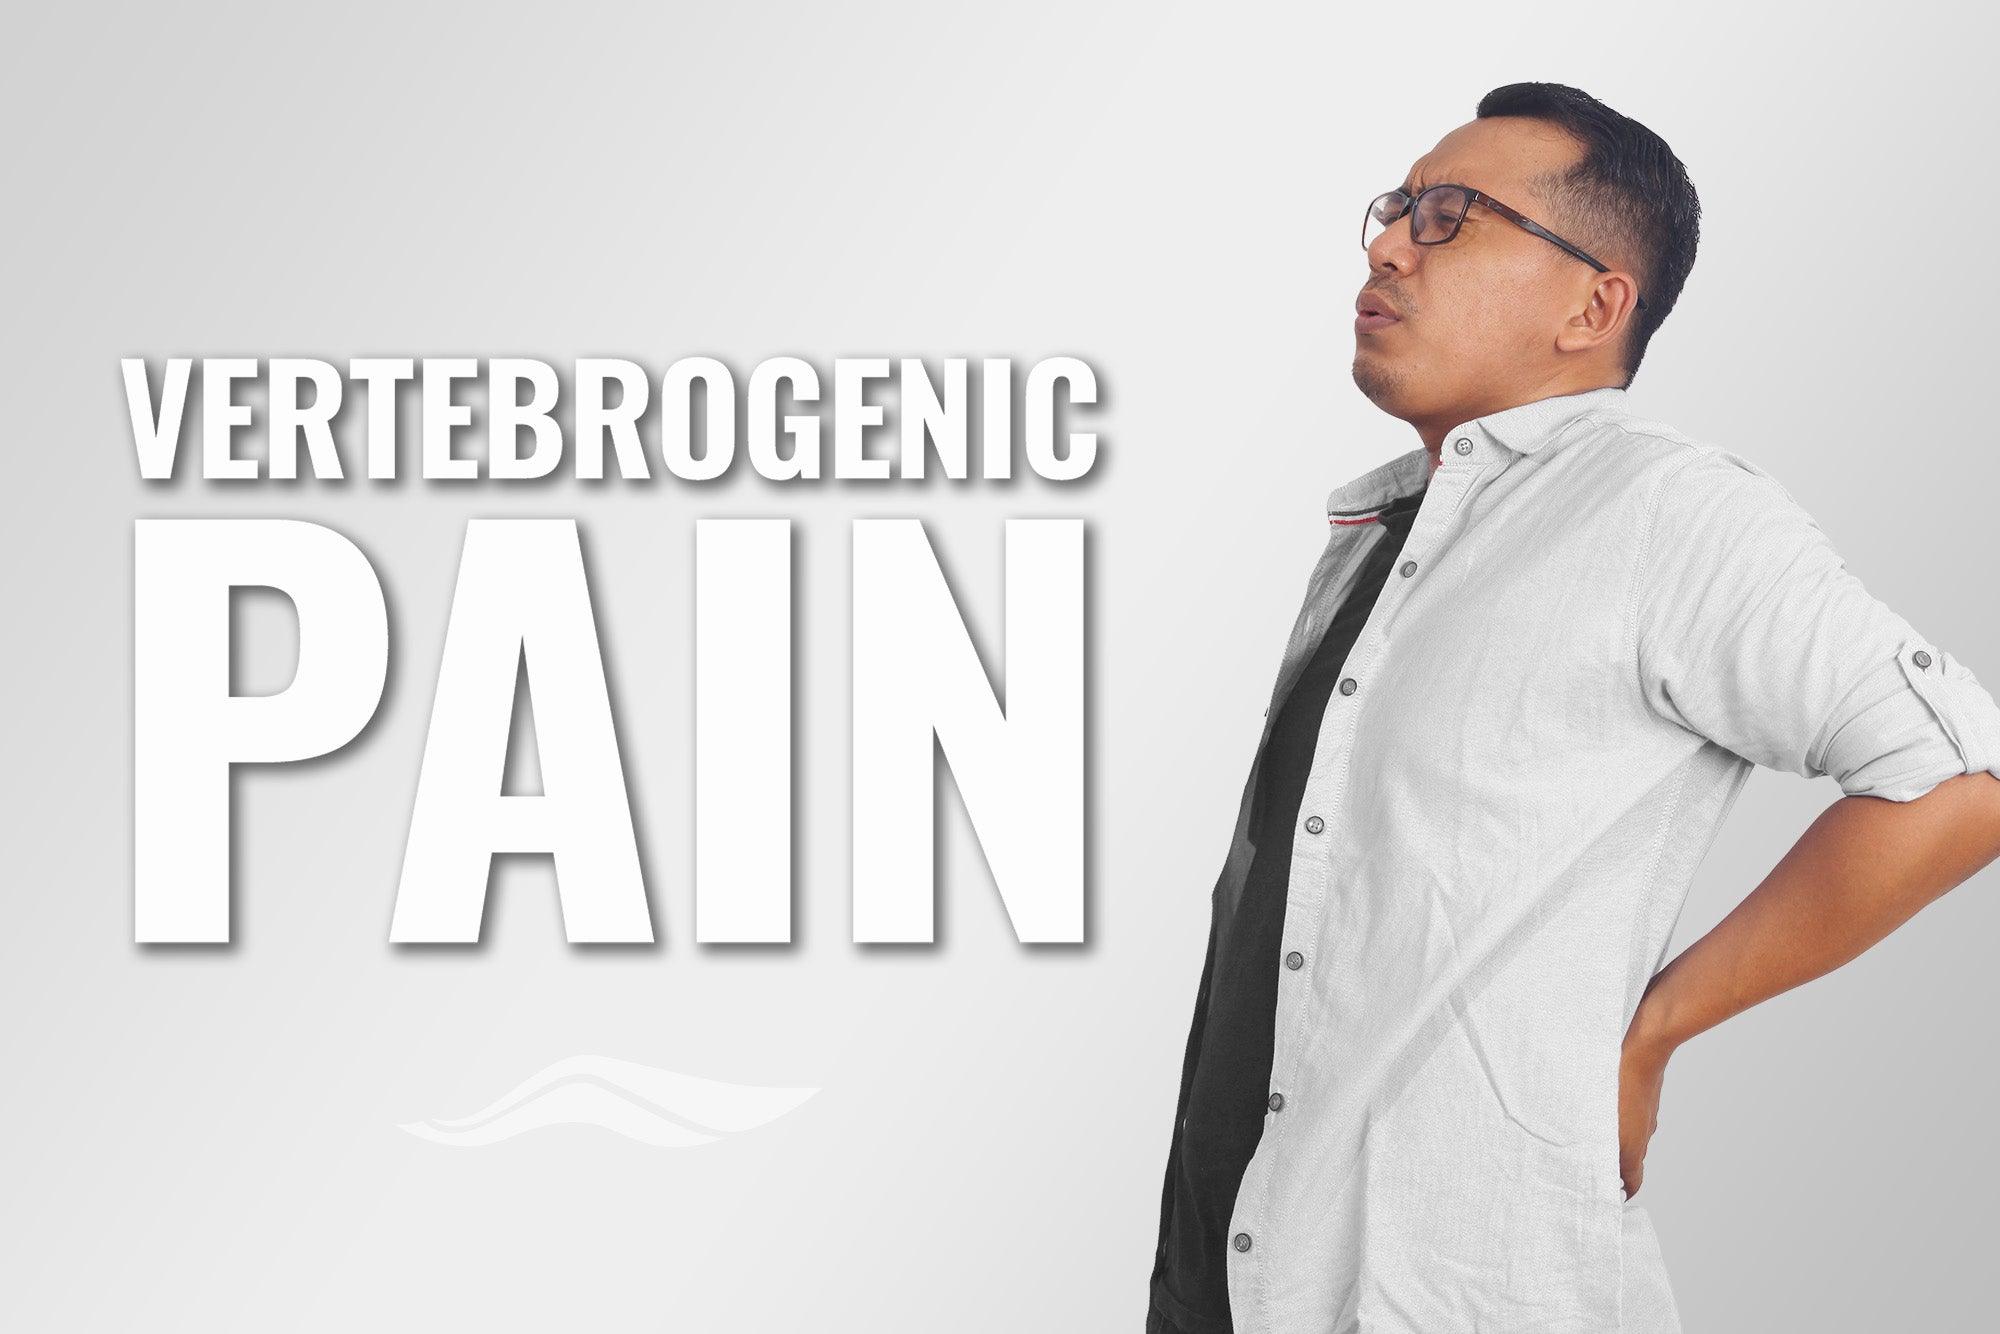 Vertebrogenic (Low Back) Pain: Causes, Diagnosis, Treatment